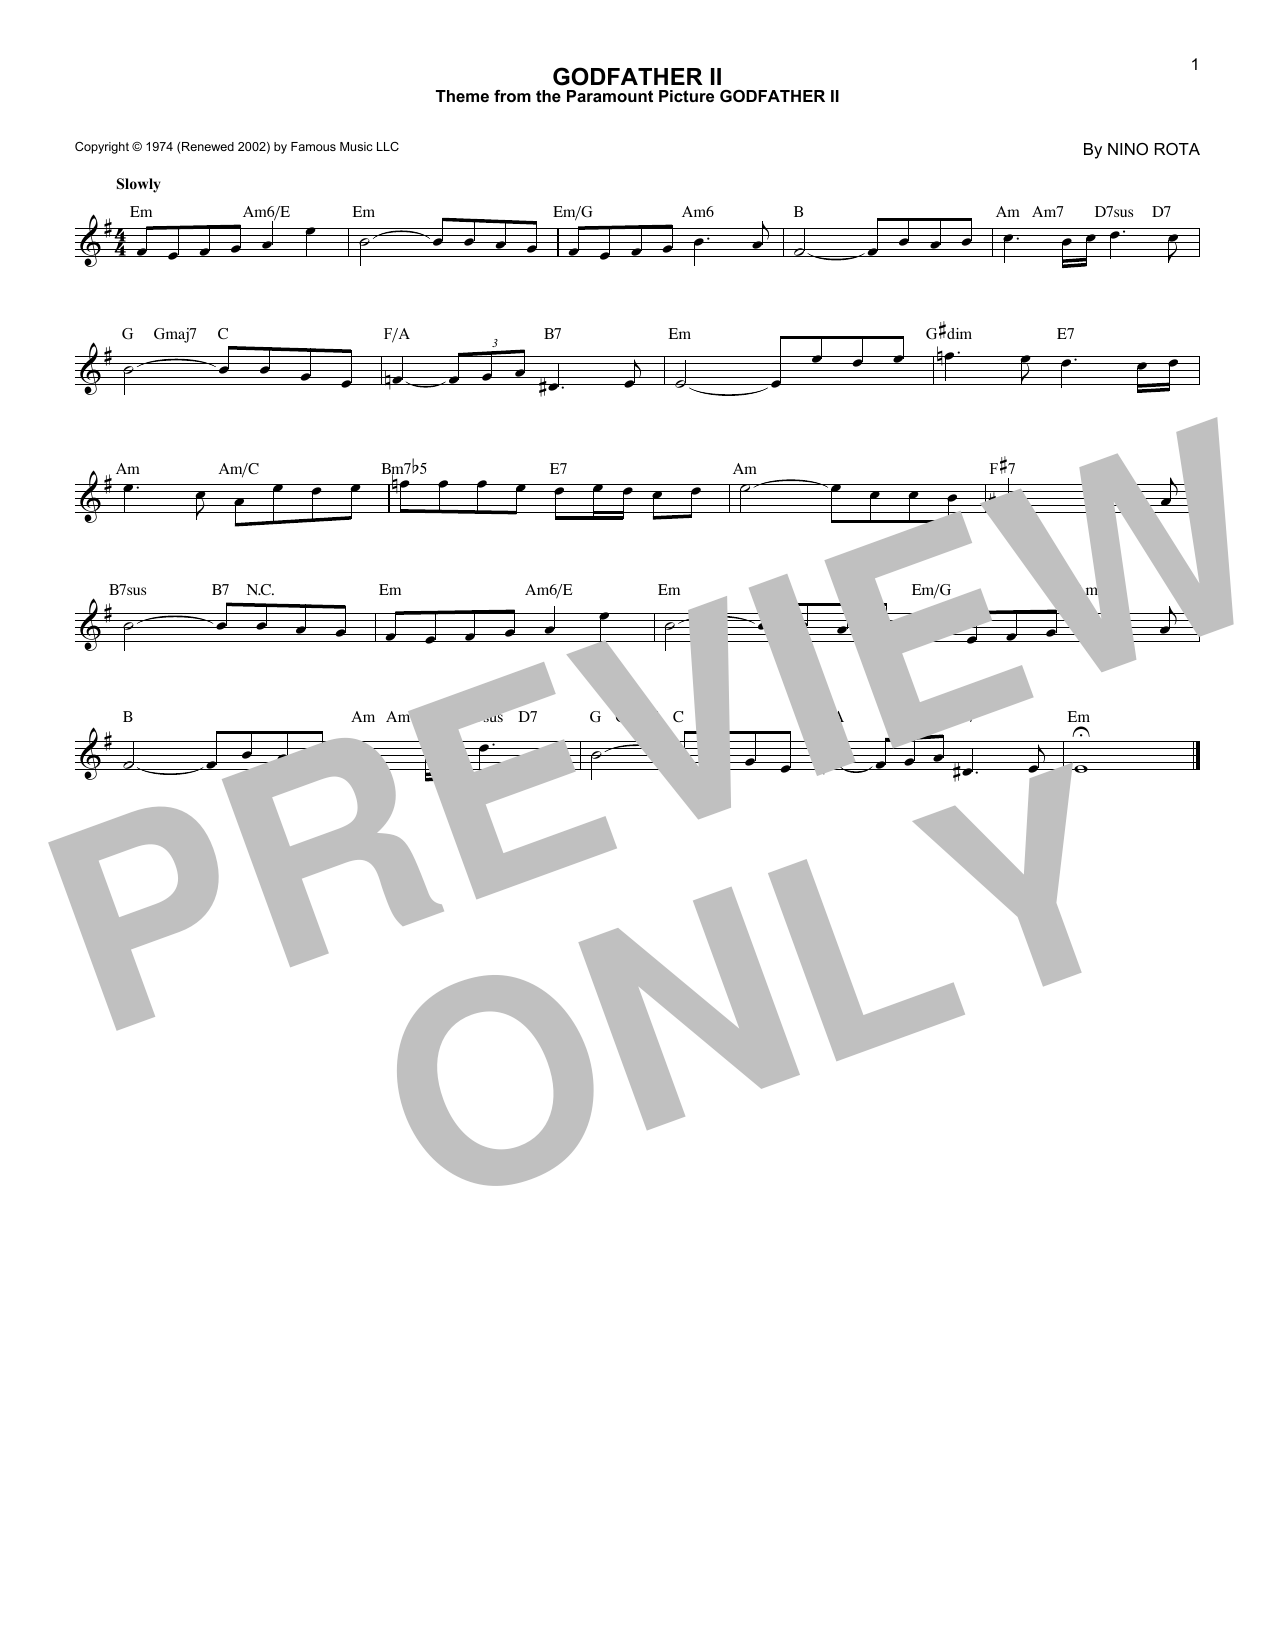 Nino Rota Godfather II Sheet Music Notes & Chords for Melody Line, Lyrics & Chords - Download or Print PDF